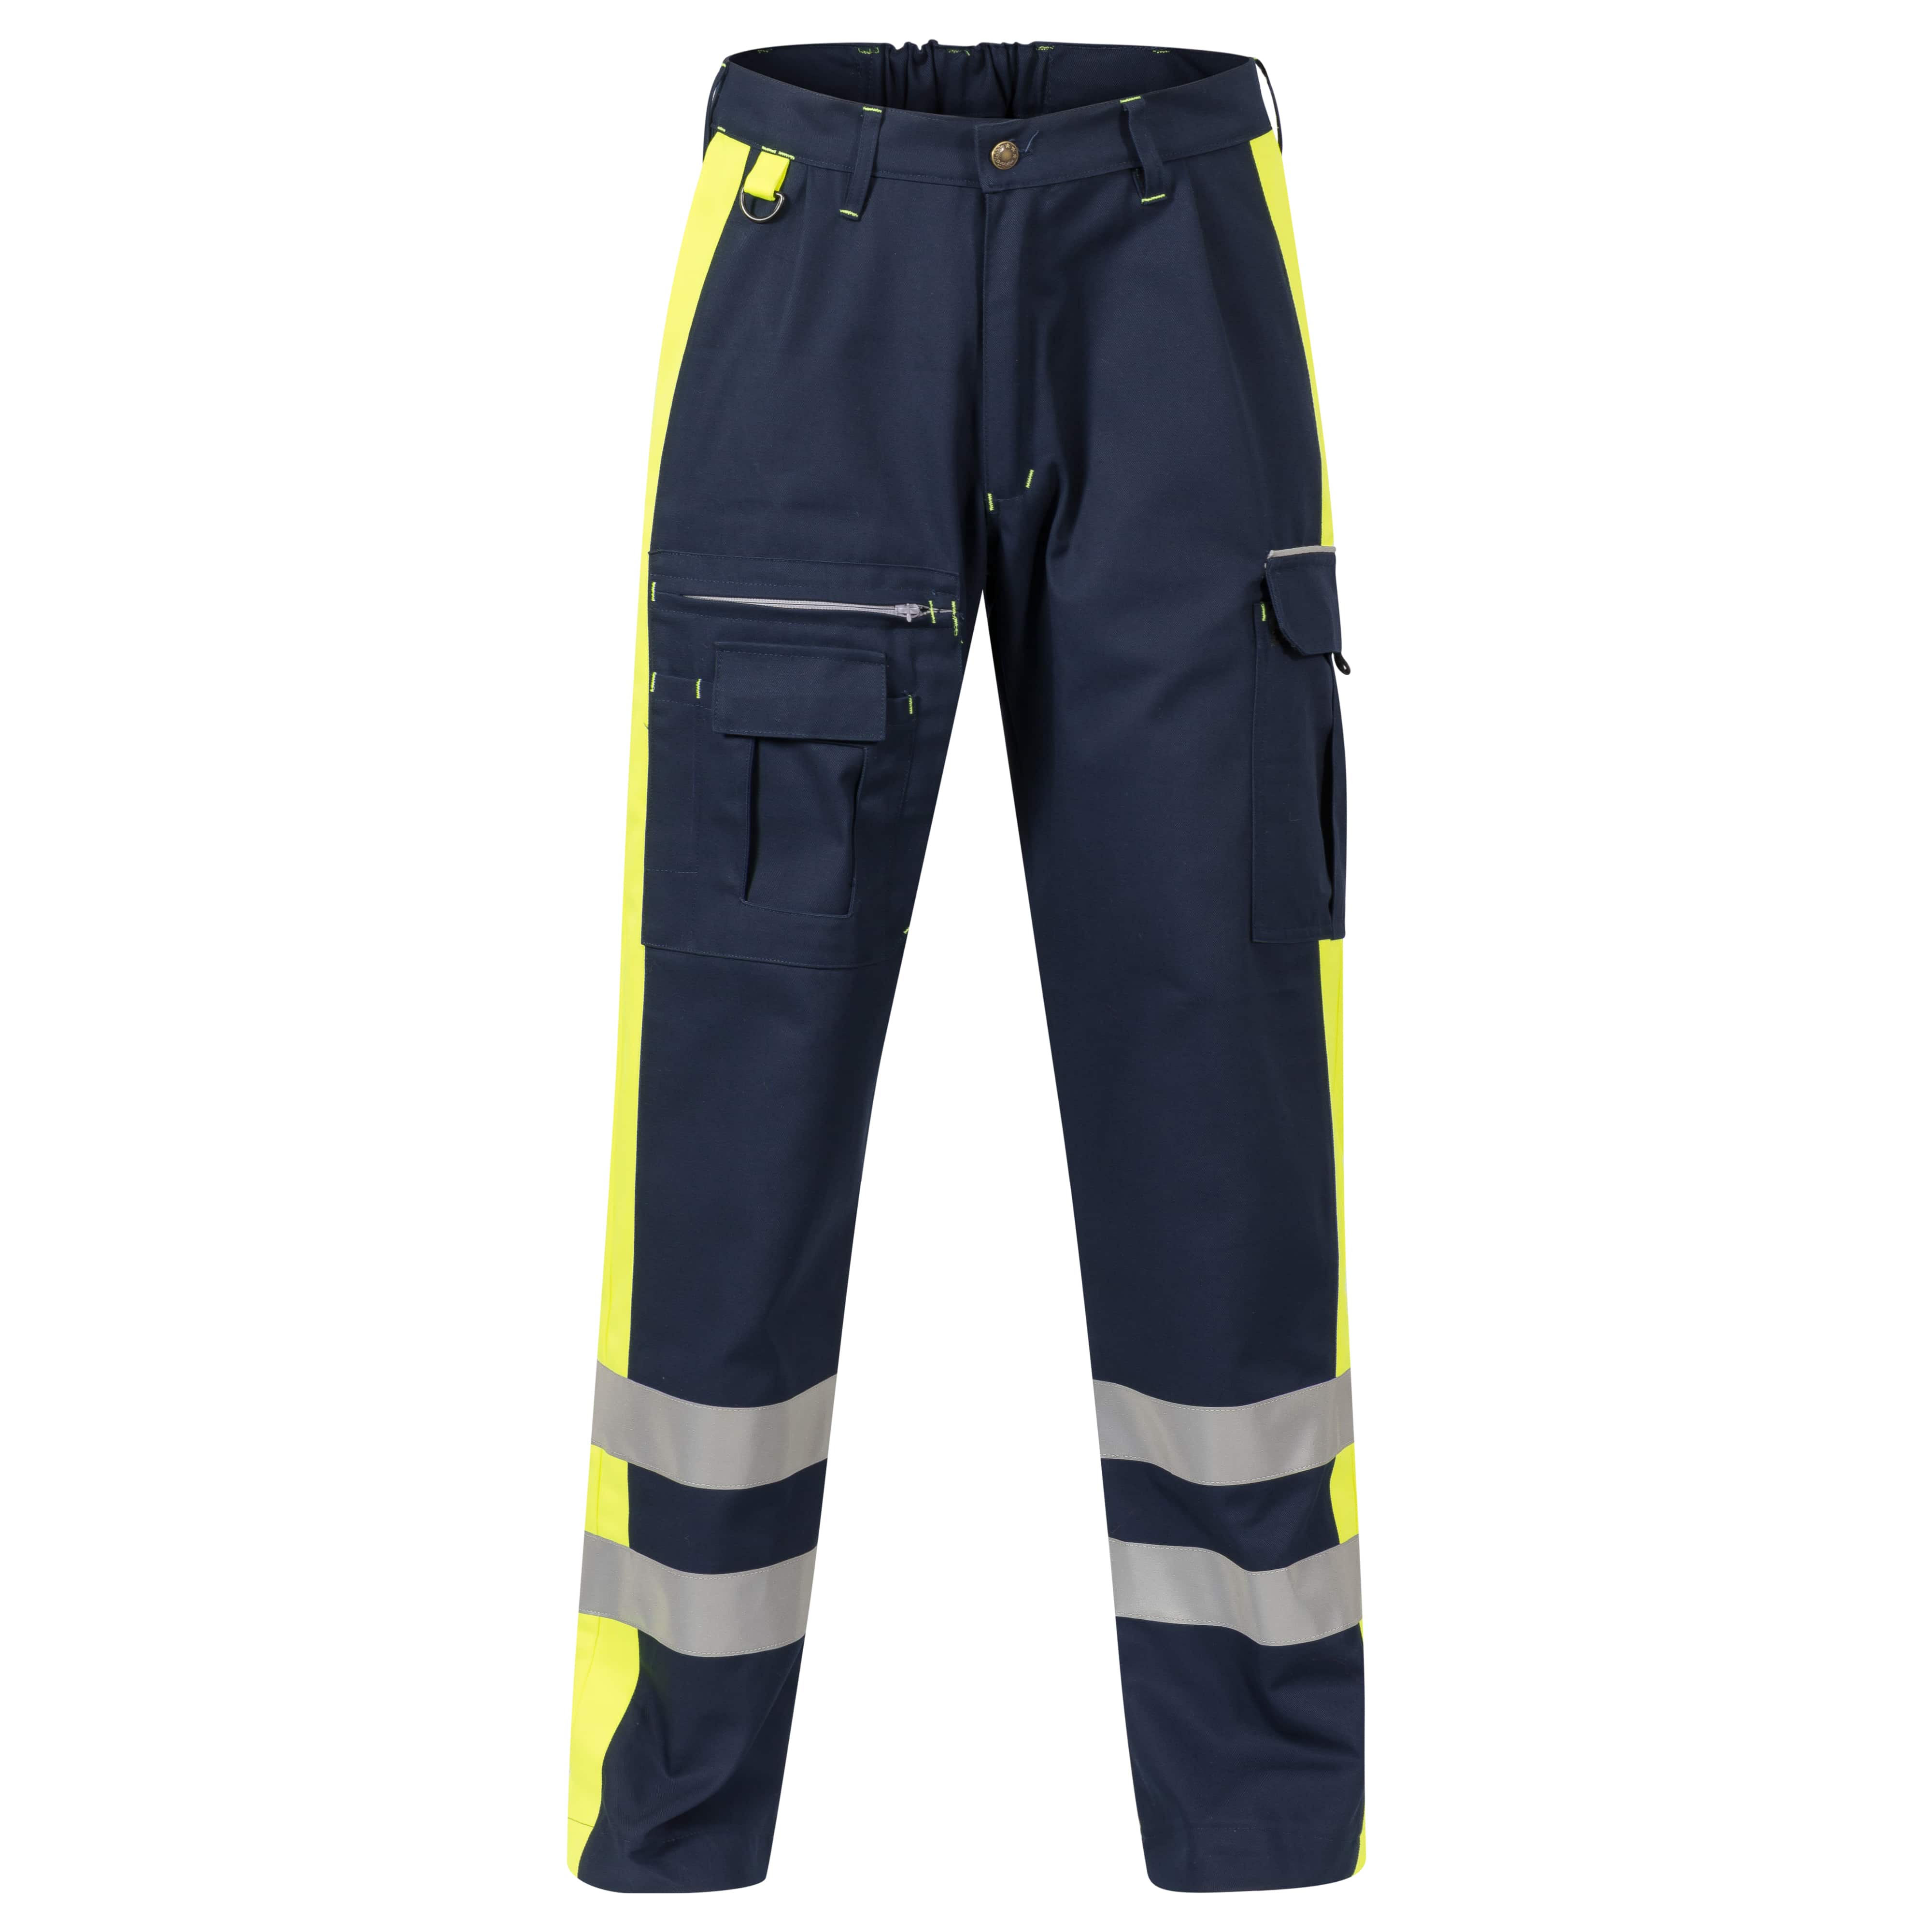 Rescuewear Unisex Hose 33416 Marineblau / Neon Gelb